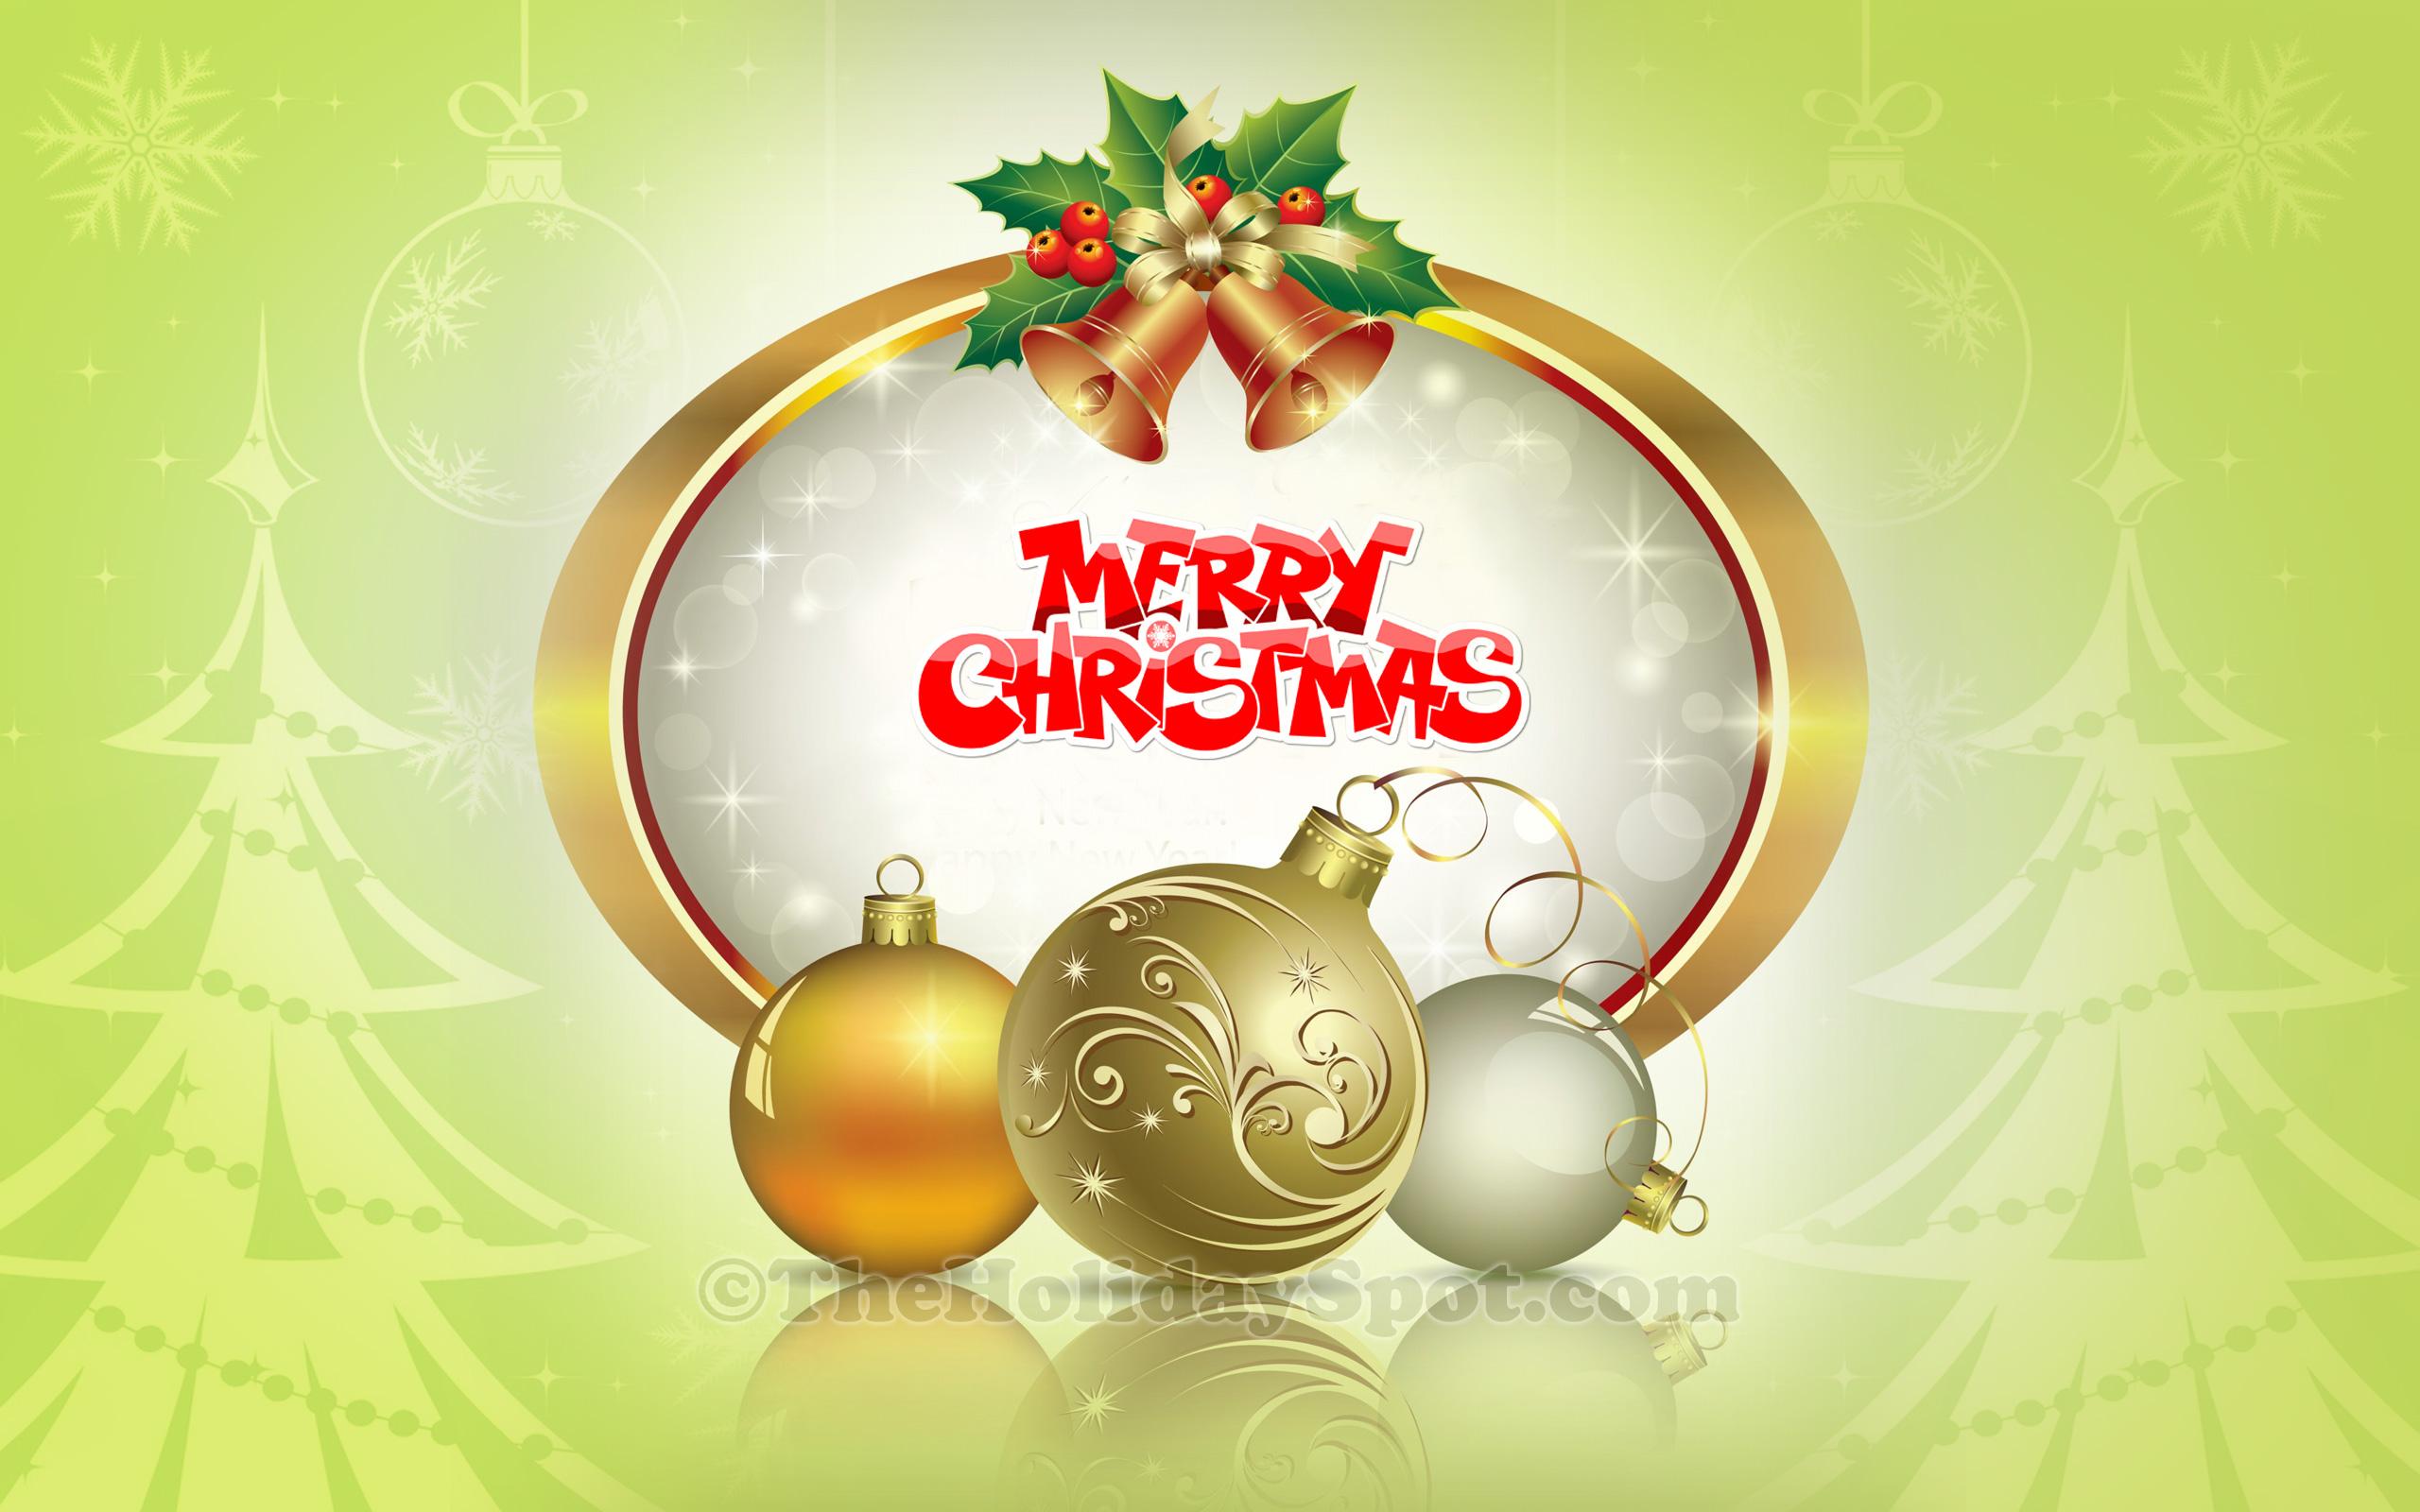 Christmas HD 1080p Wallpaper. Download Christmas HD